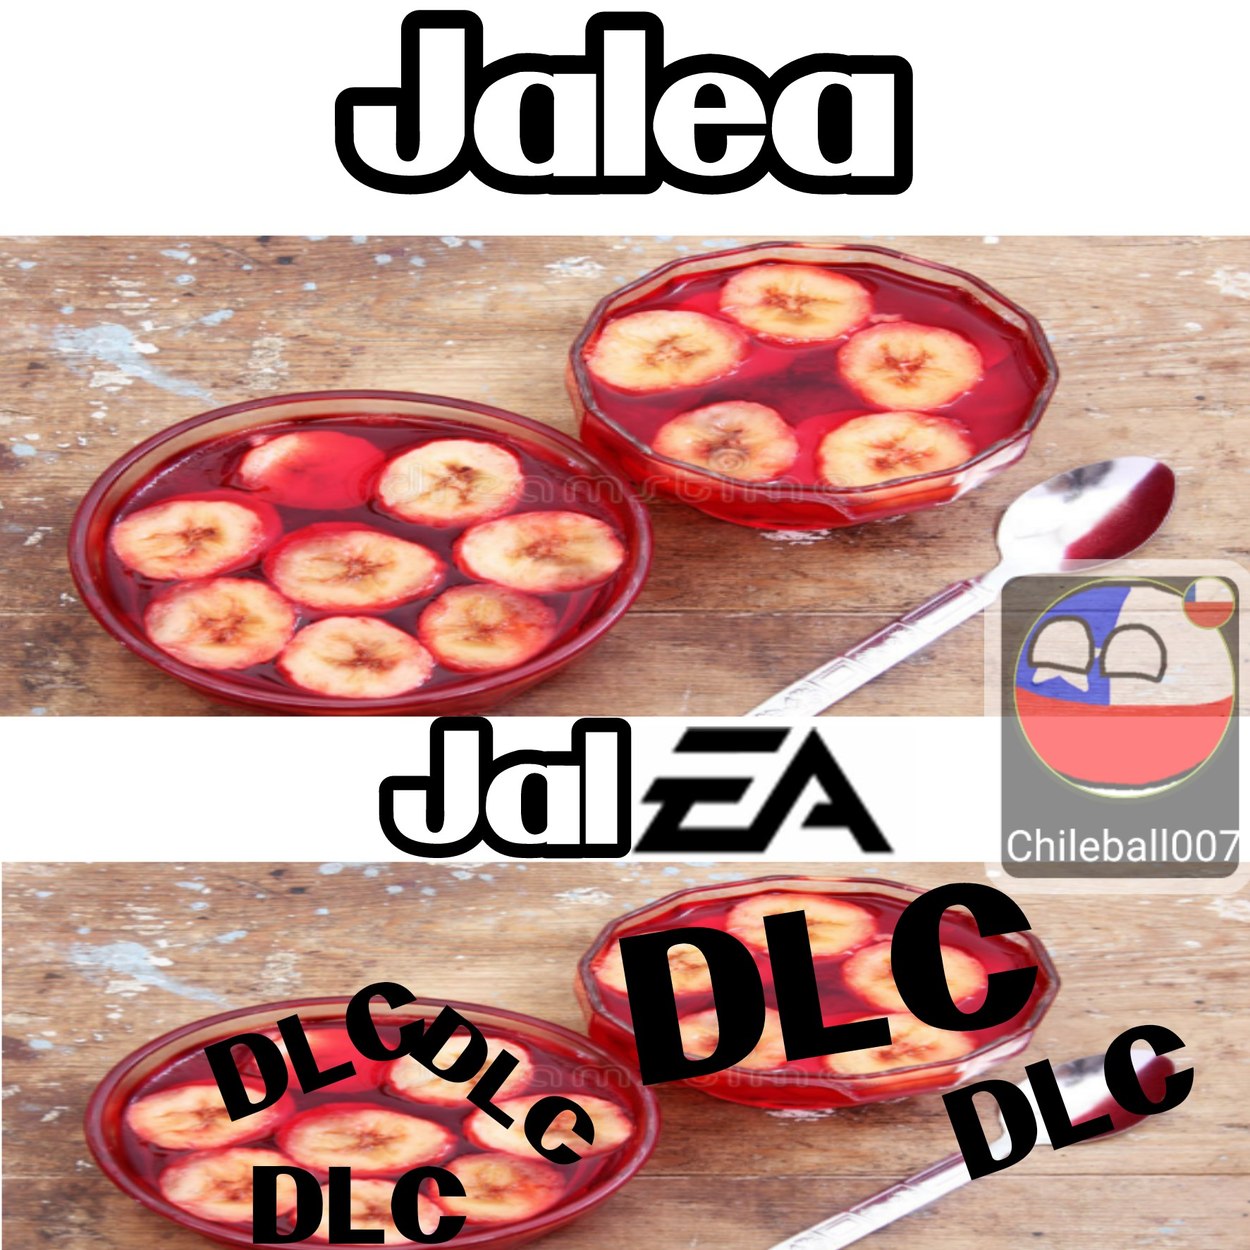 EA Es Diabolico Meme Subido Por Chileball007 Memedroid